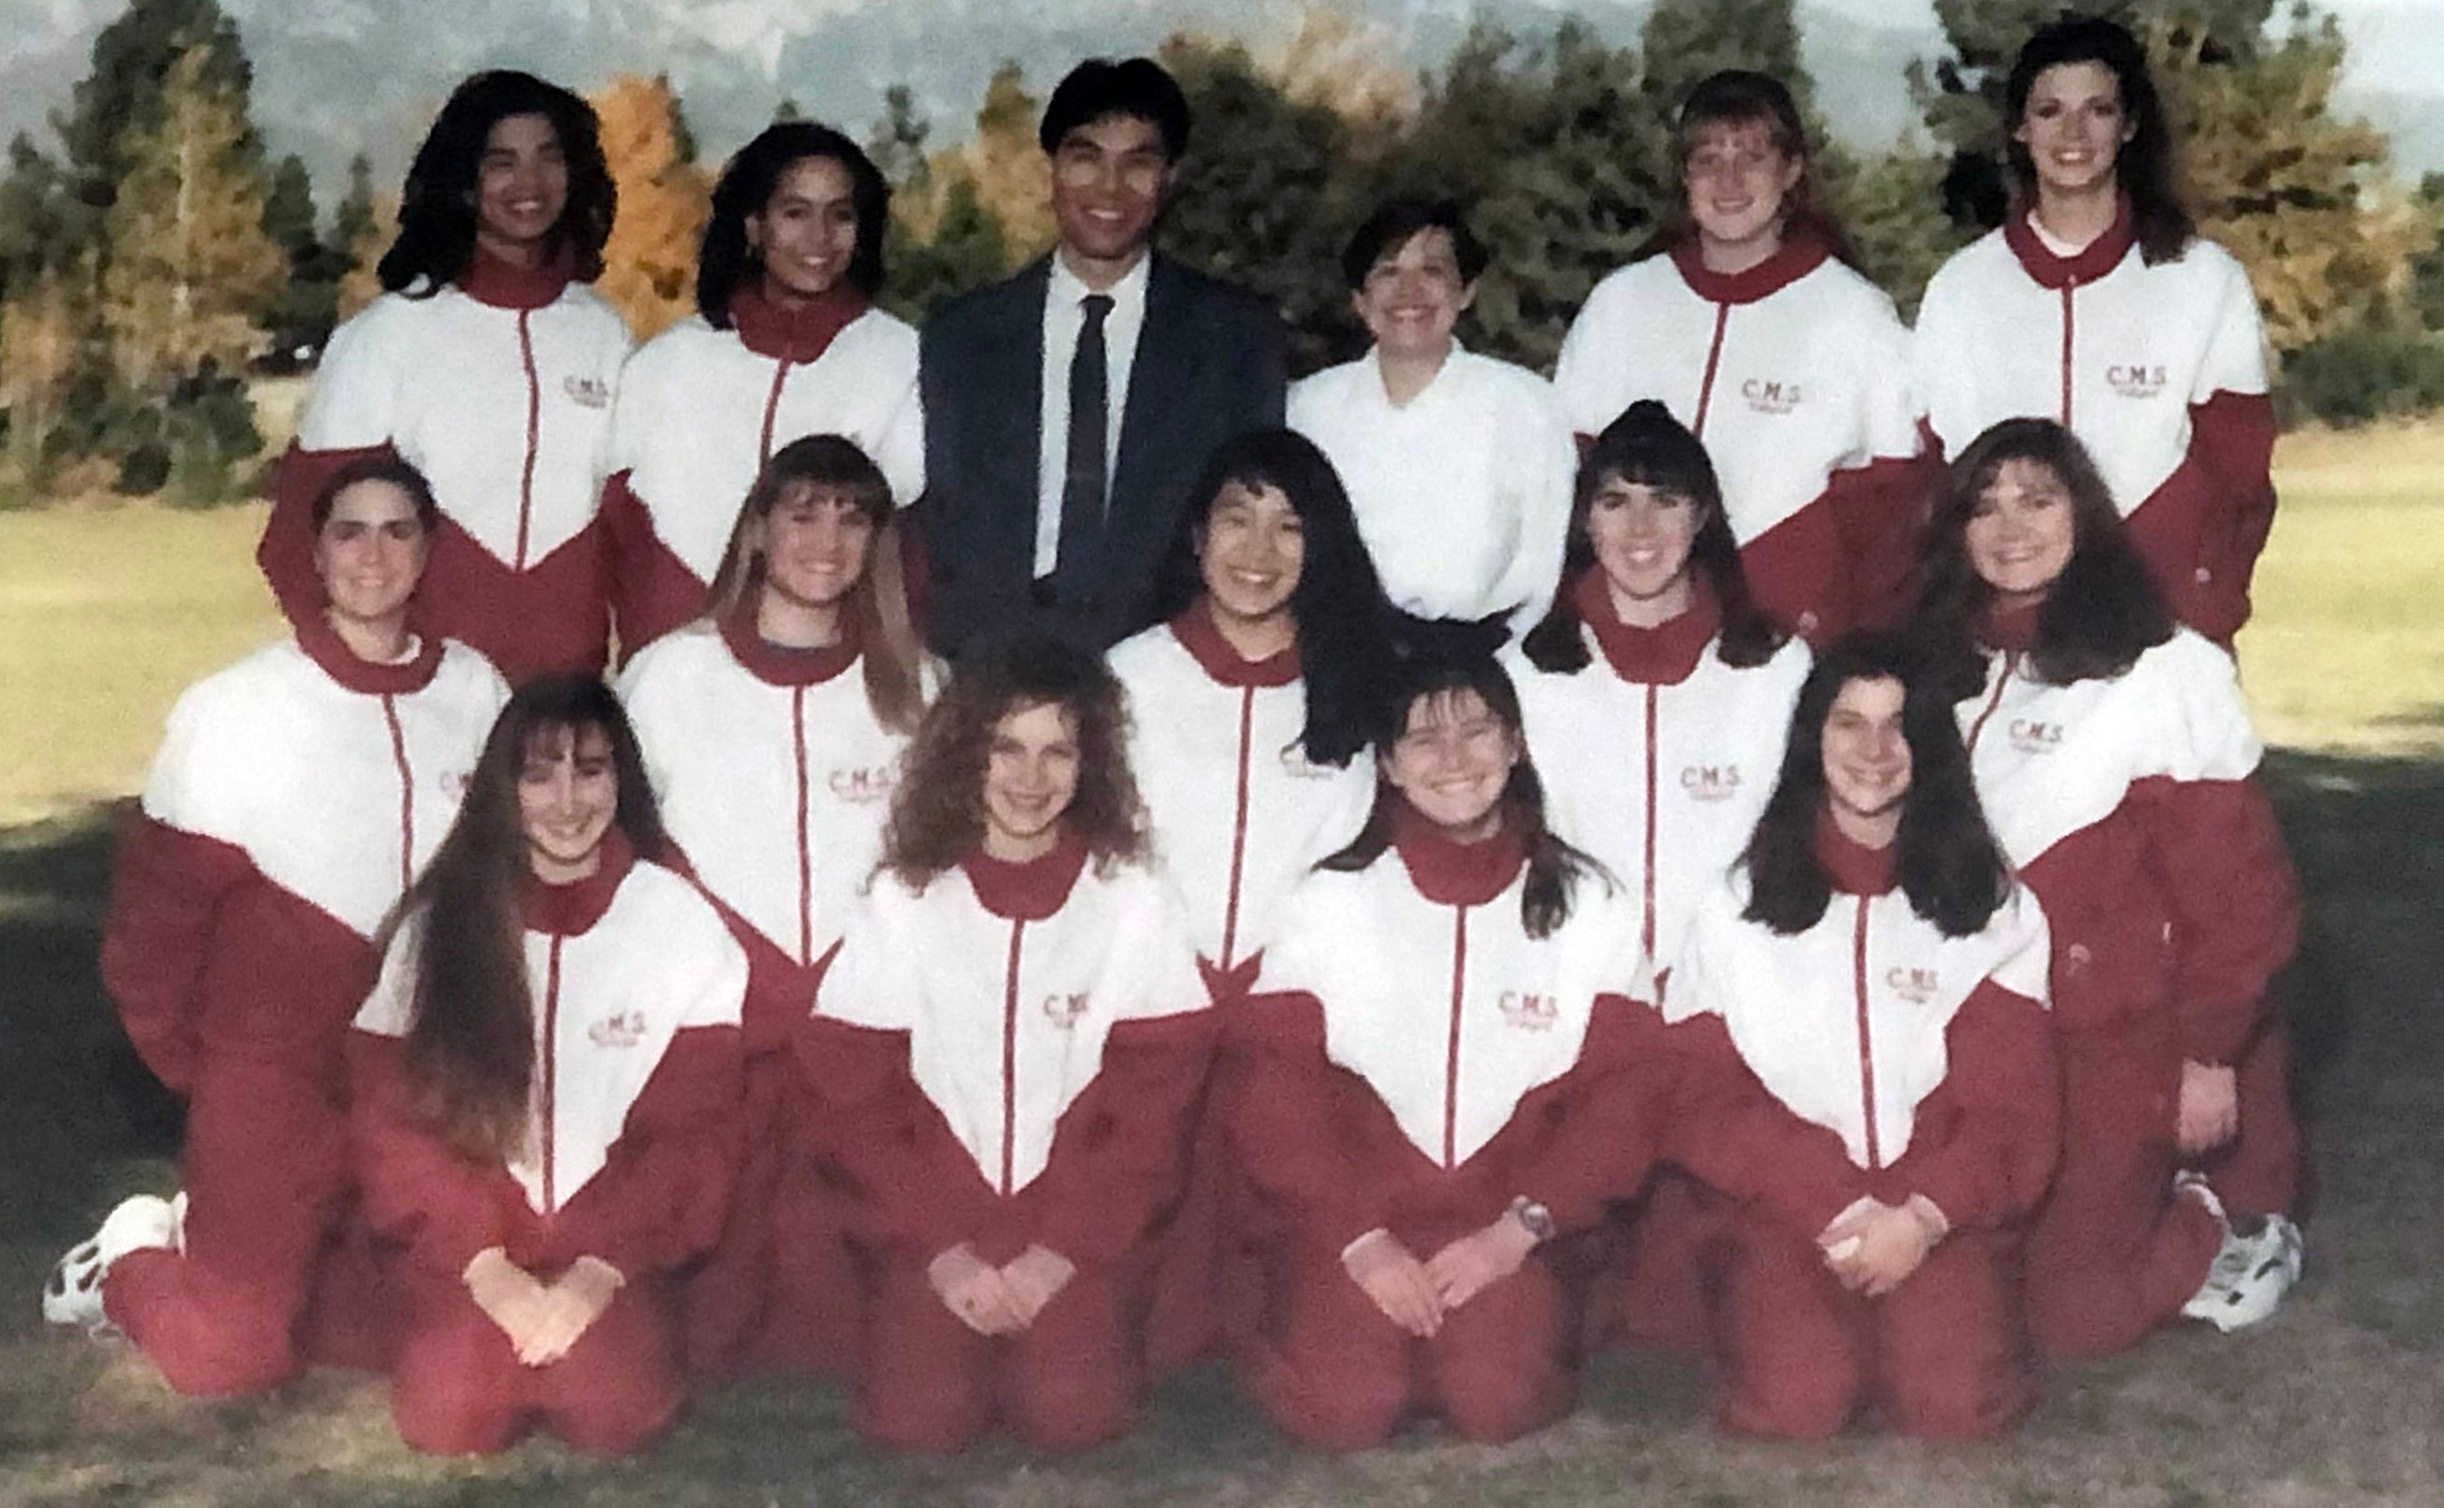 1993 Volleyball Team Photo